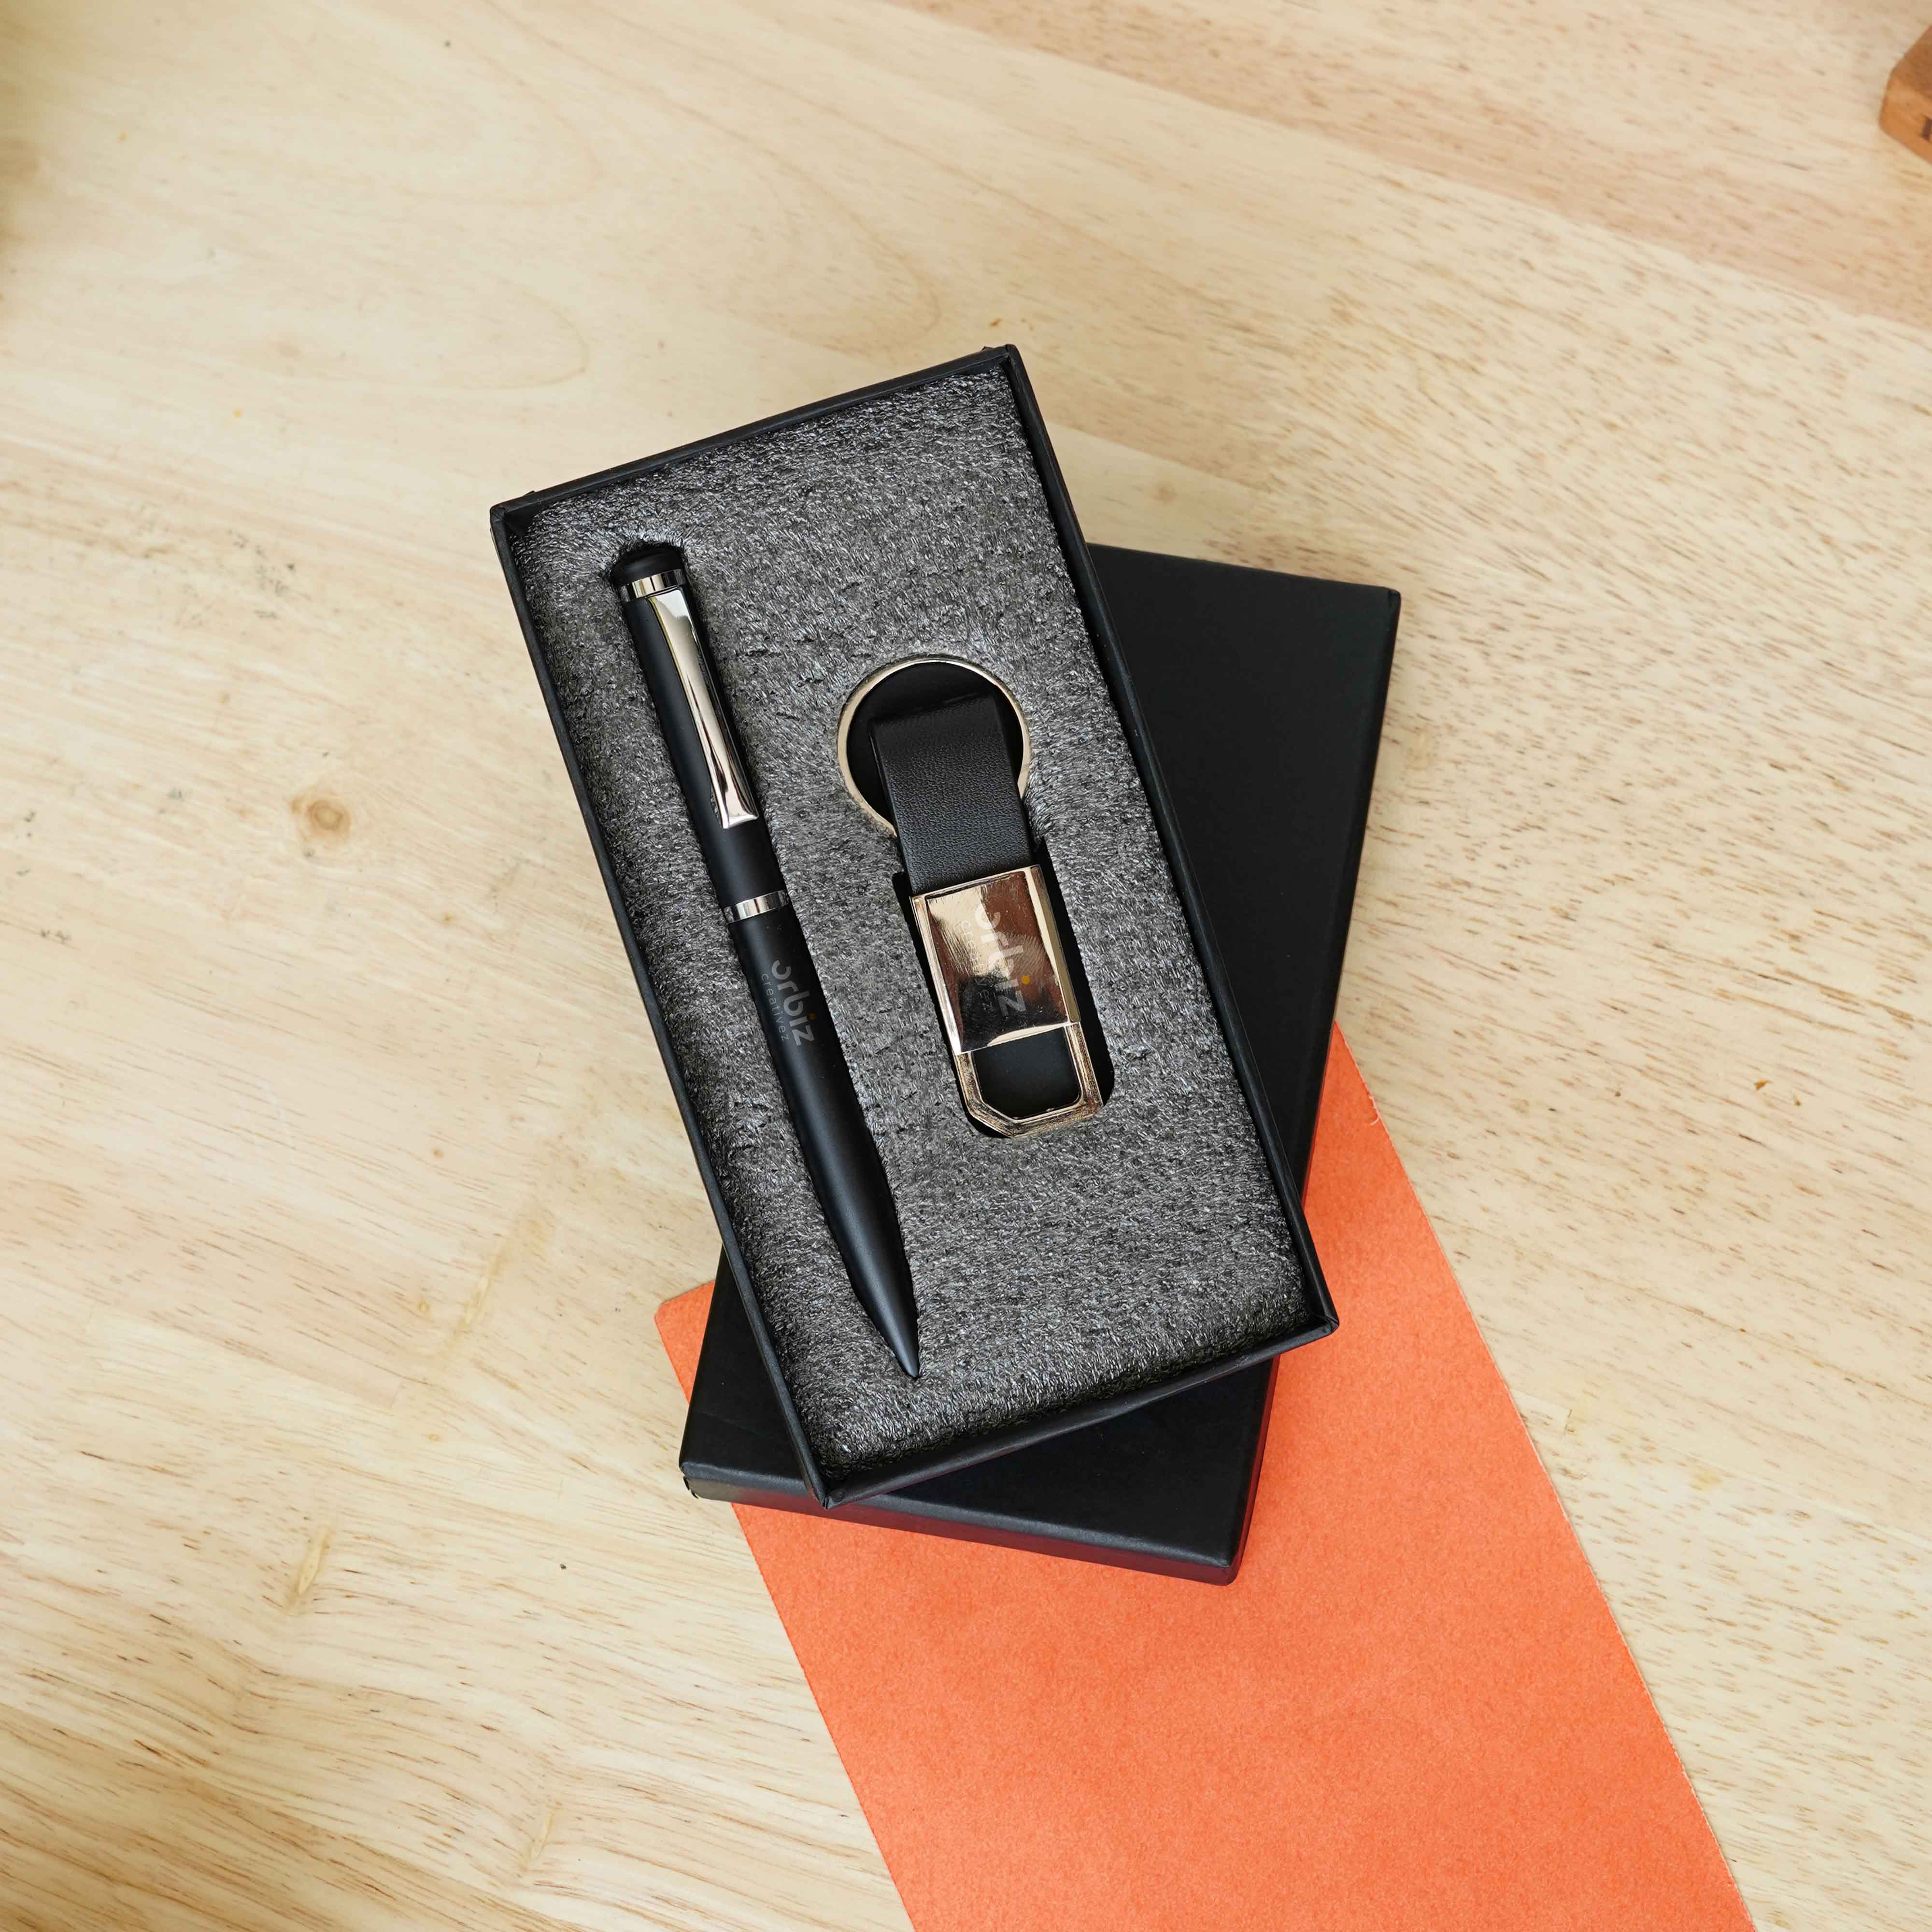 Corporate Gift/ Keychain, Pen - Orbiz Creativez